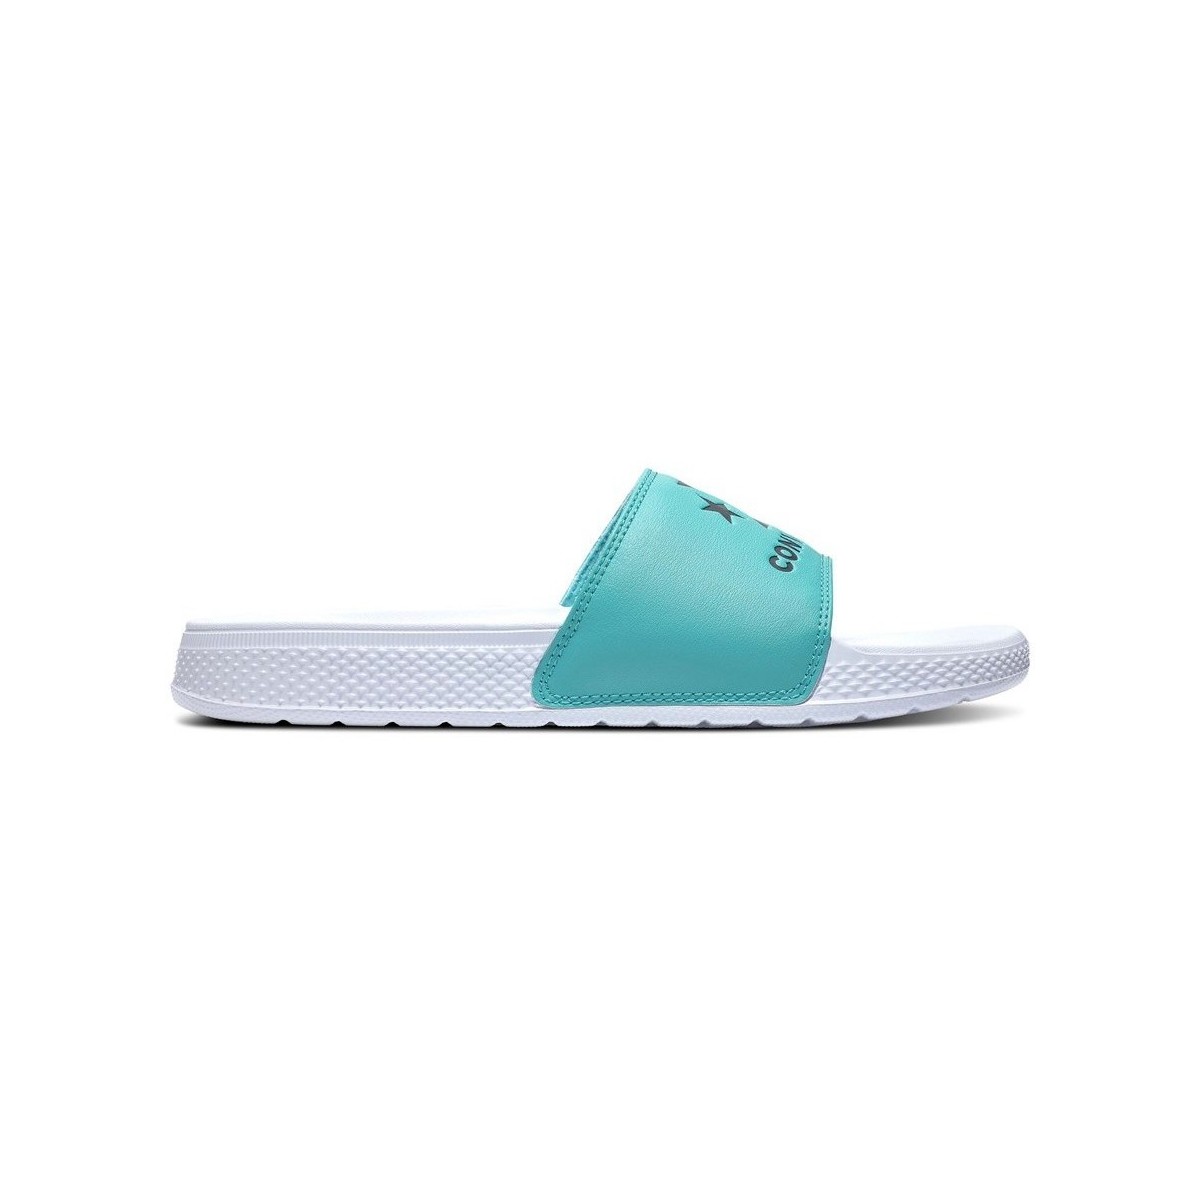 Pantofi  Flip-Flops Converse All Star Slide Seasonal Color De turcoaz